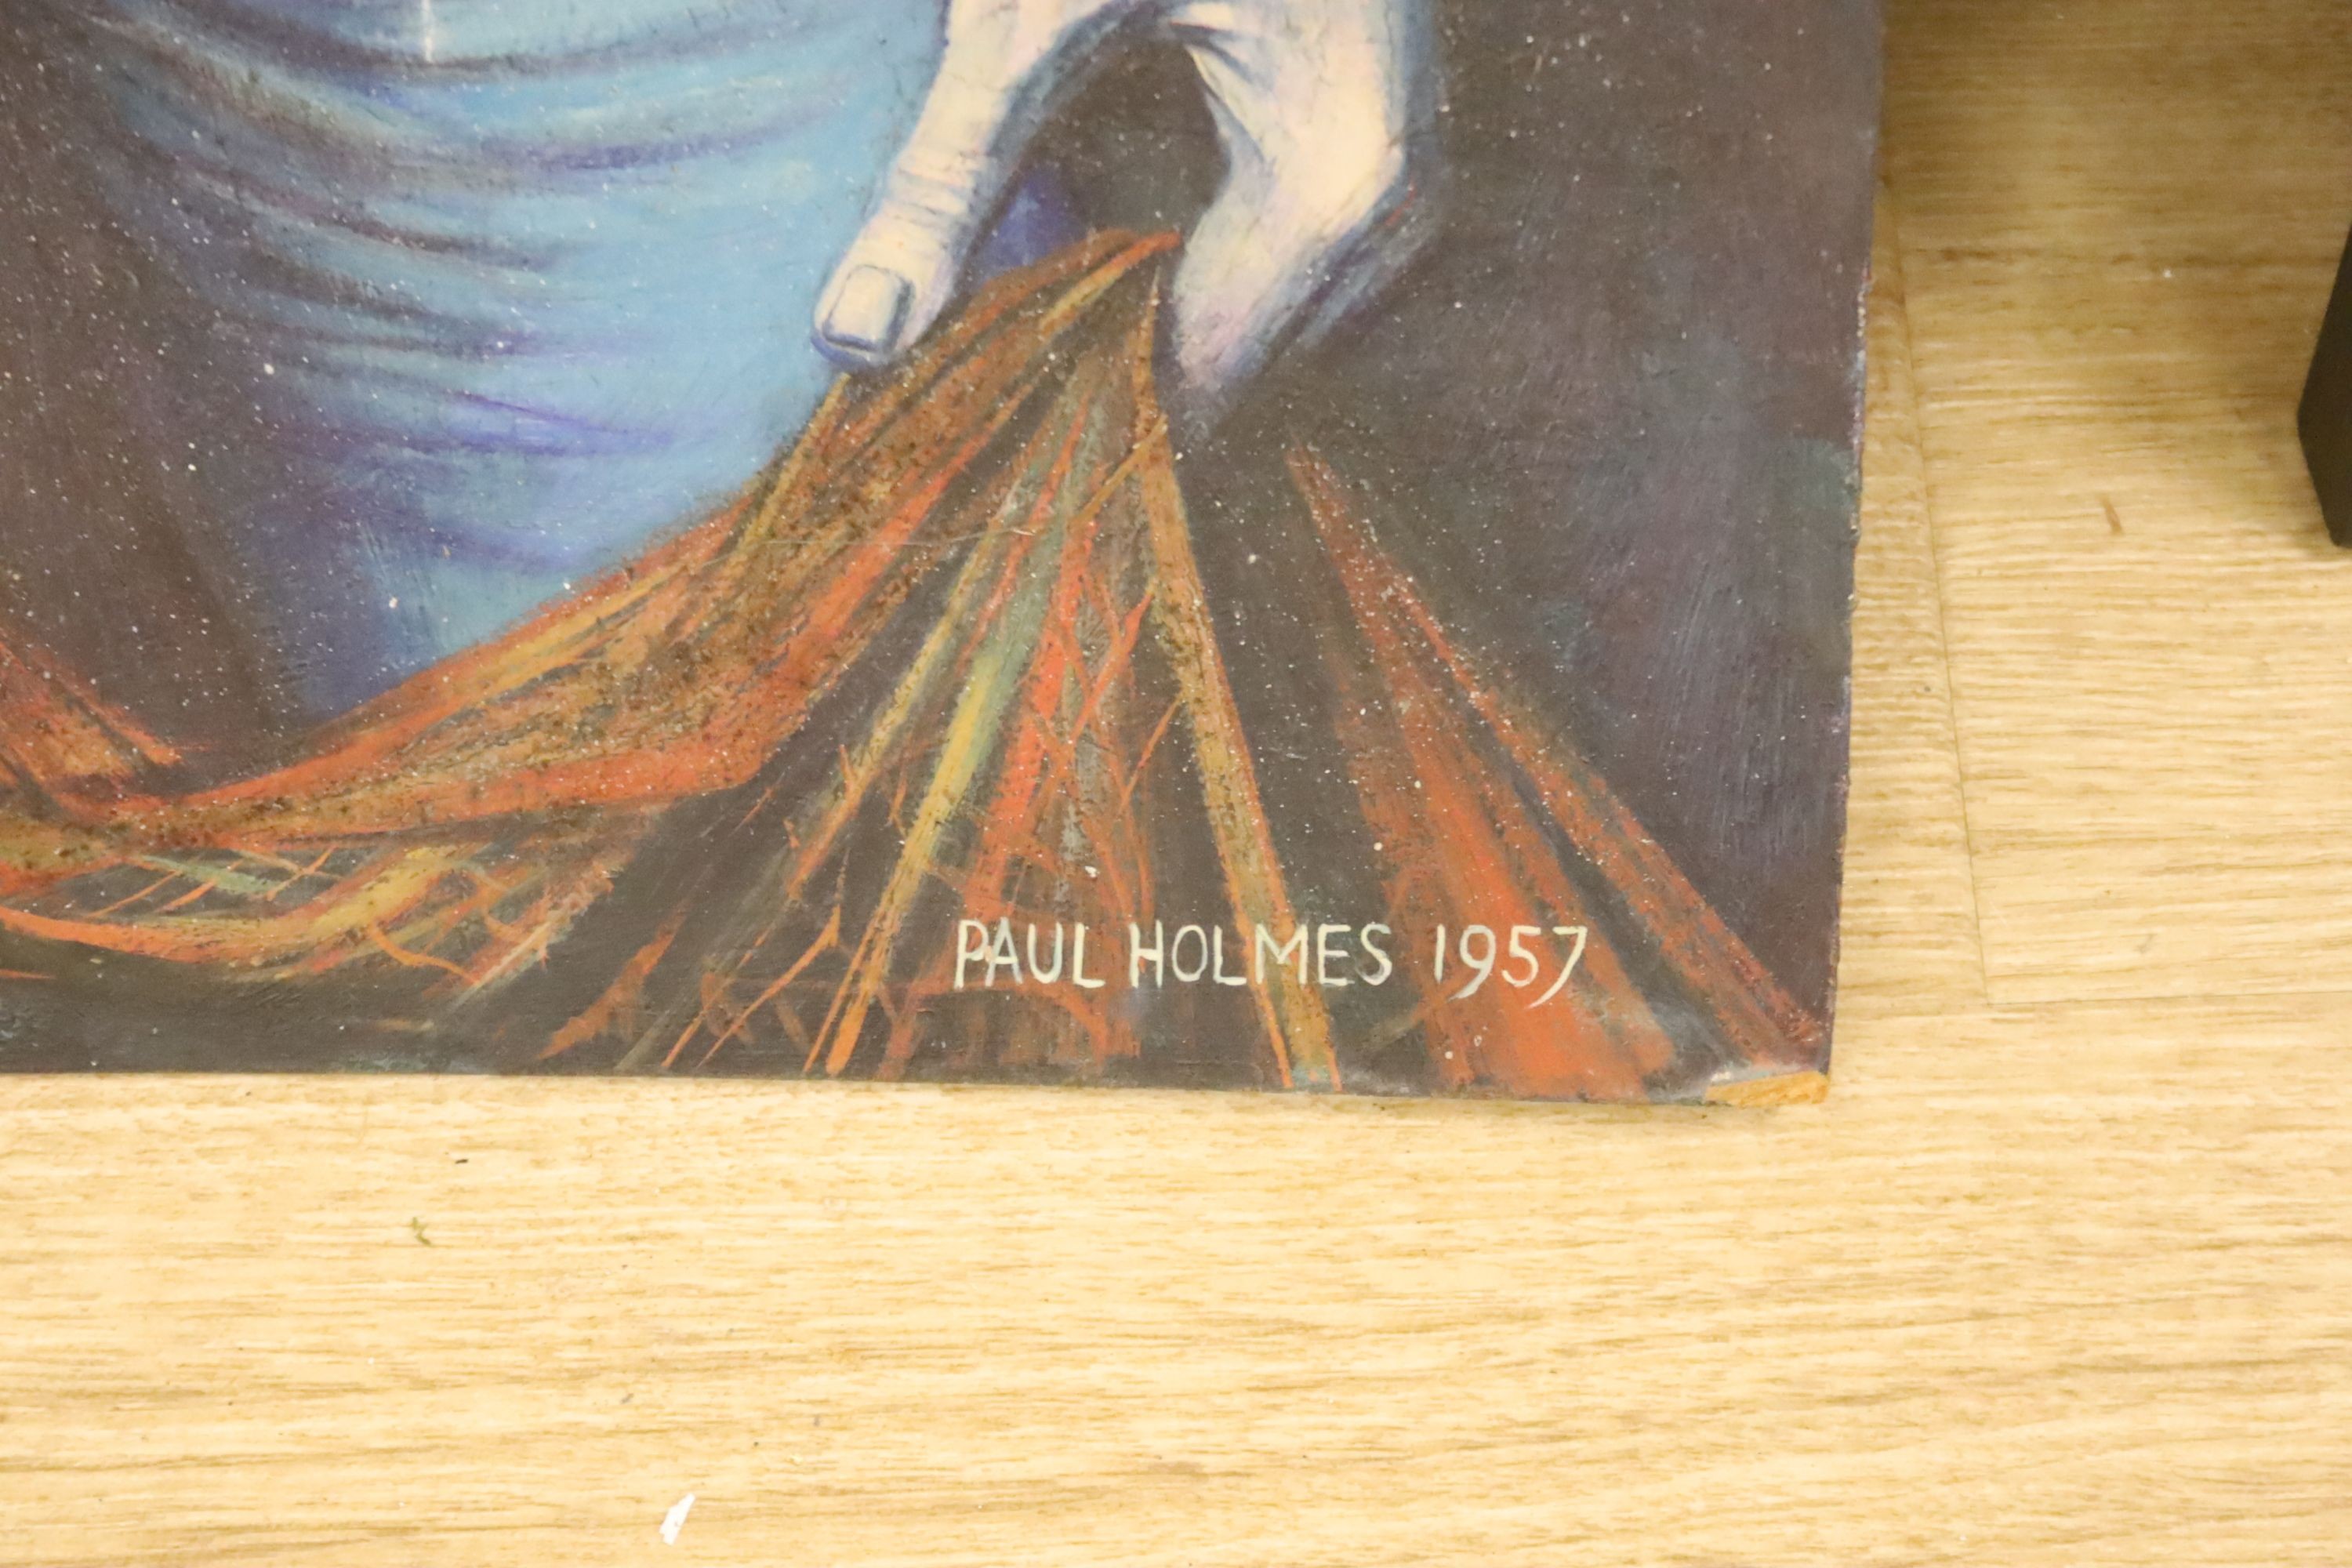 Paul Holmes, gentleman with fish